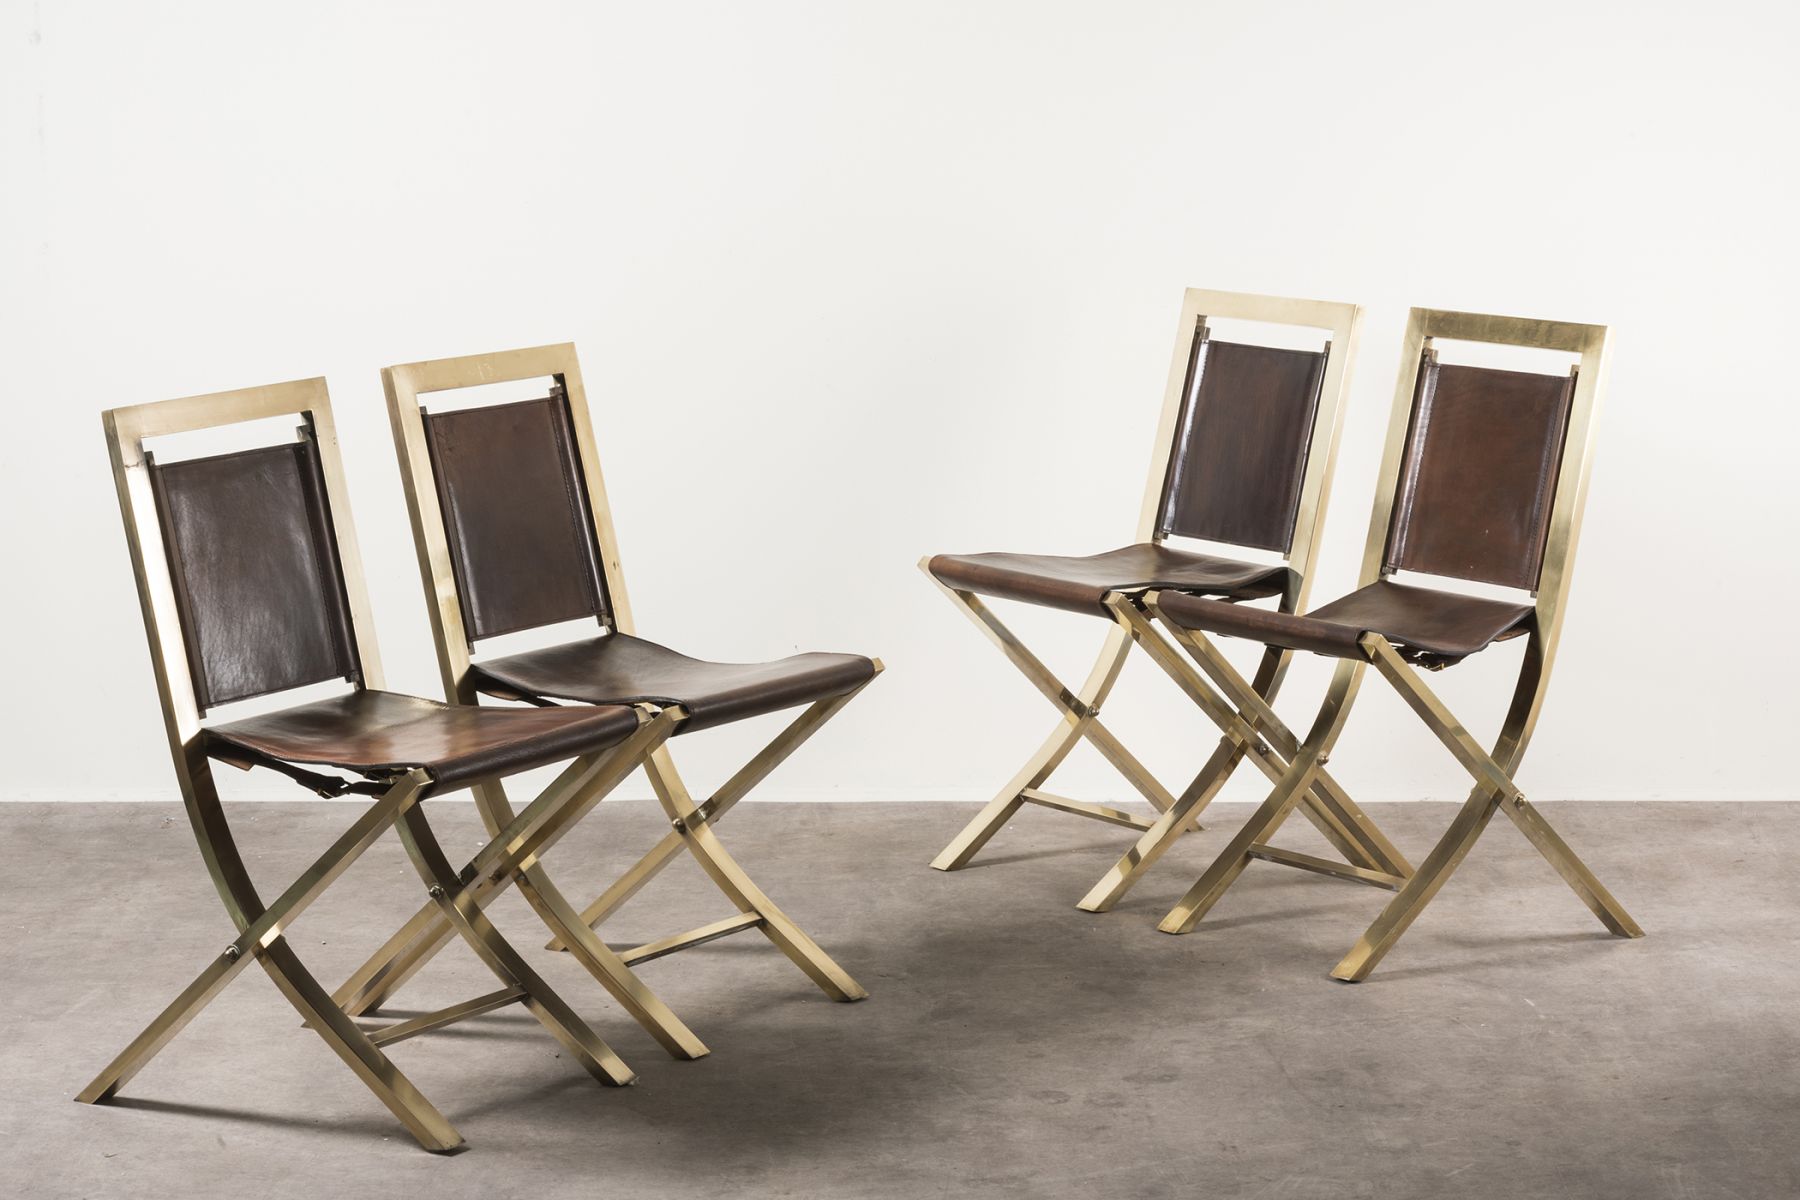 Quattro sedie Mod. Sedia'73 Gabriella Crespi pic-1